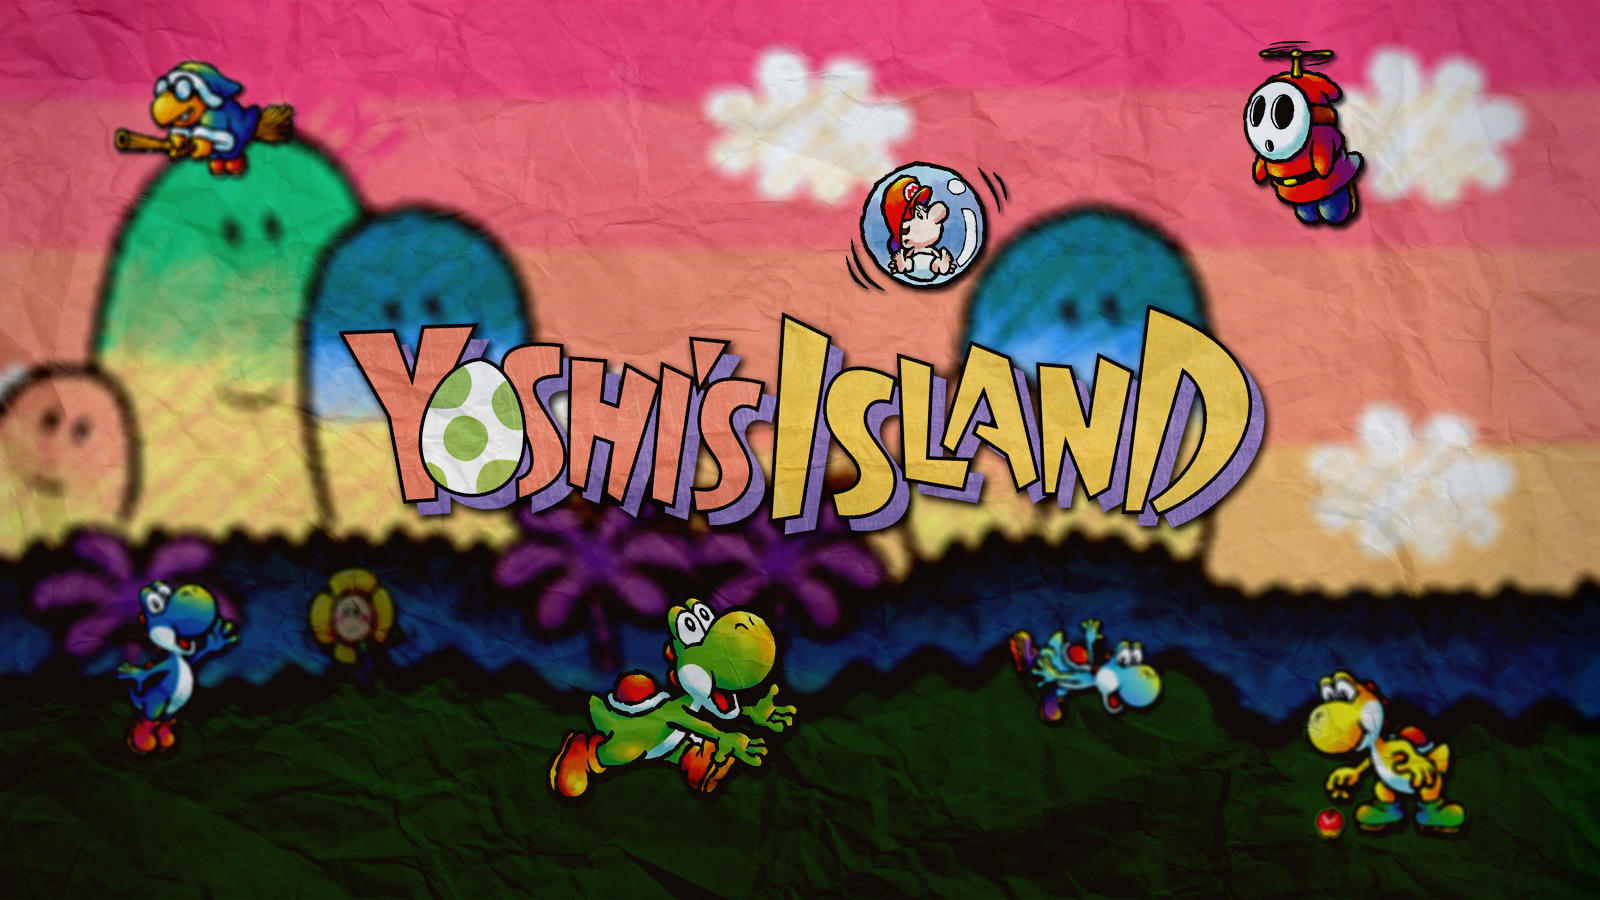 Video Game Super Mario World 2 Yoshis Island 1600x900